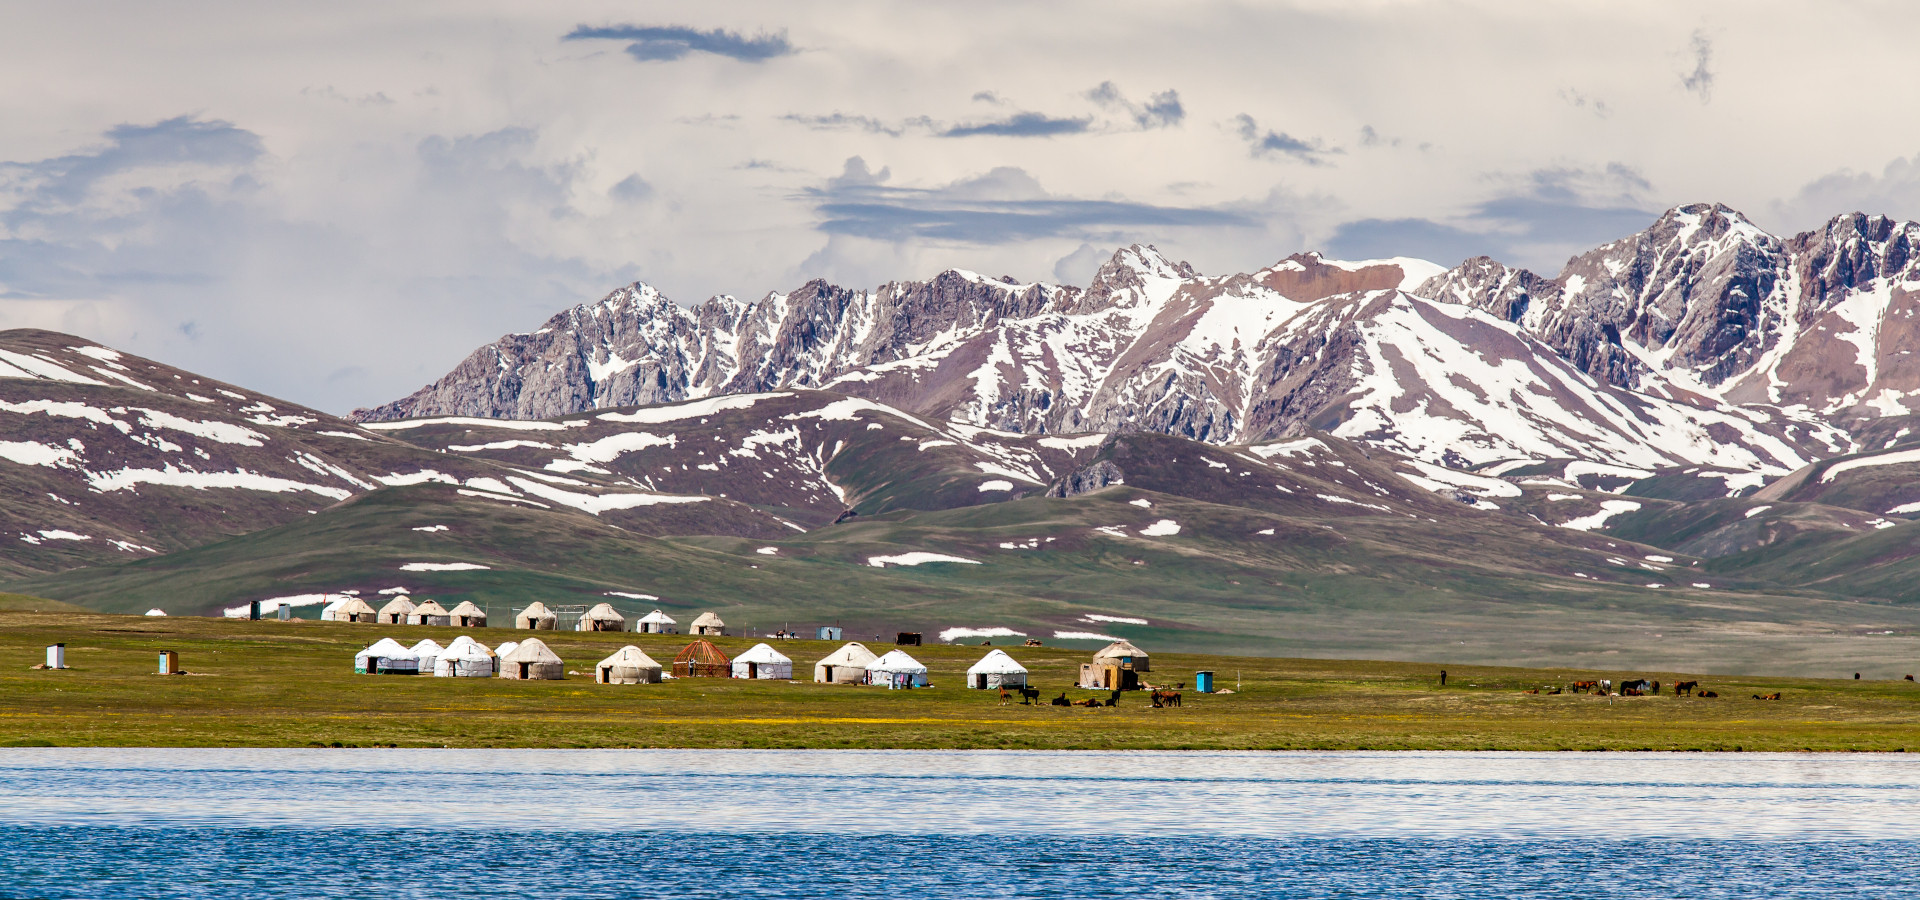 Kyrgyz yurts at Song Kul - high mountain lake in the Tian Shan Mountains in Kyrgyzstan